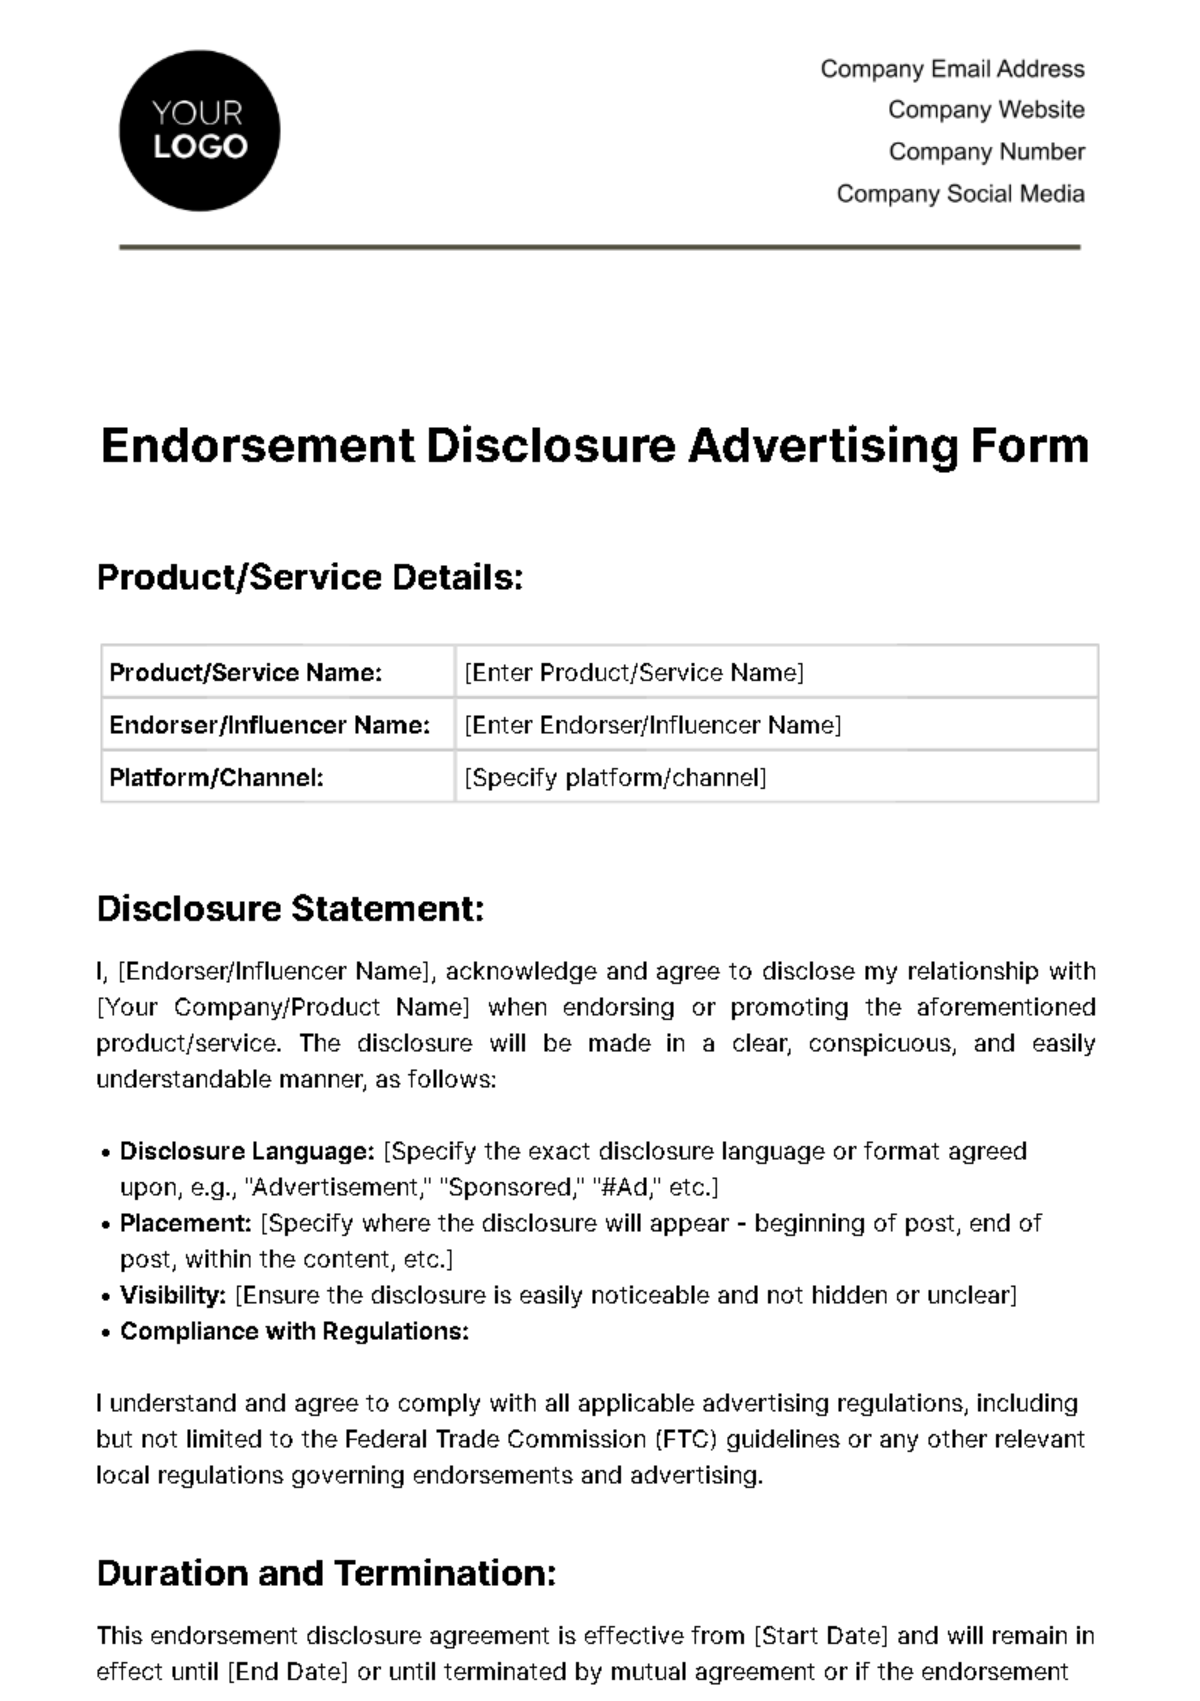 Endorsement Disclosure Advertising Form Template